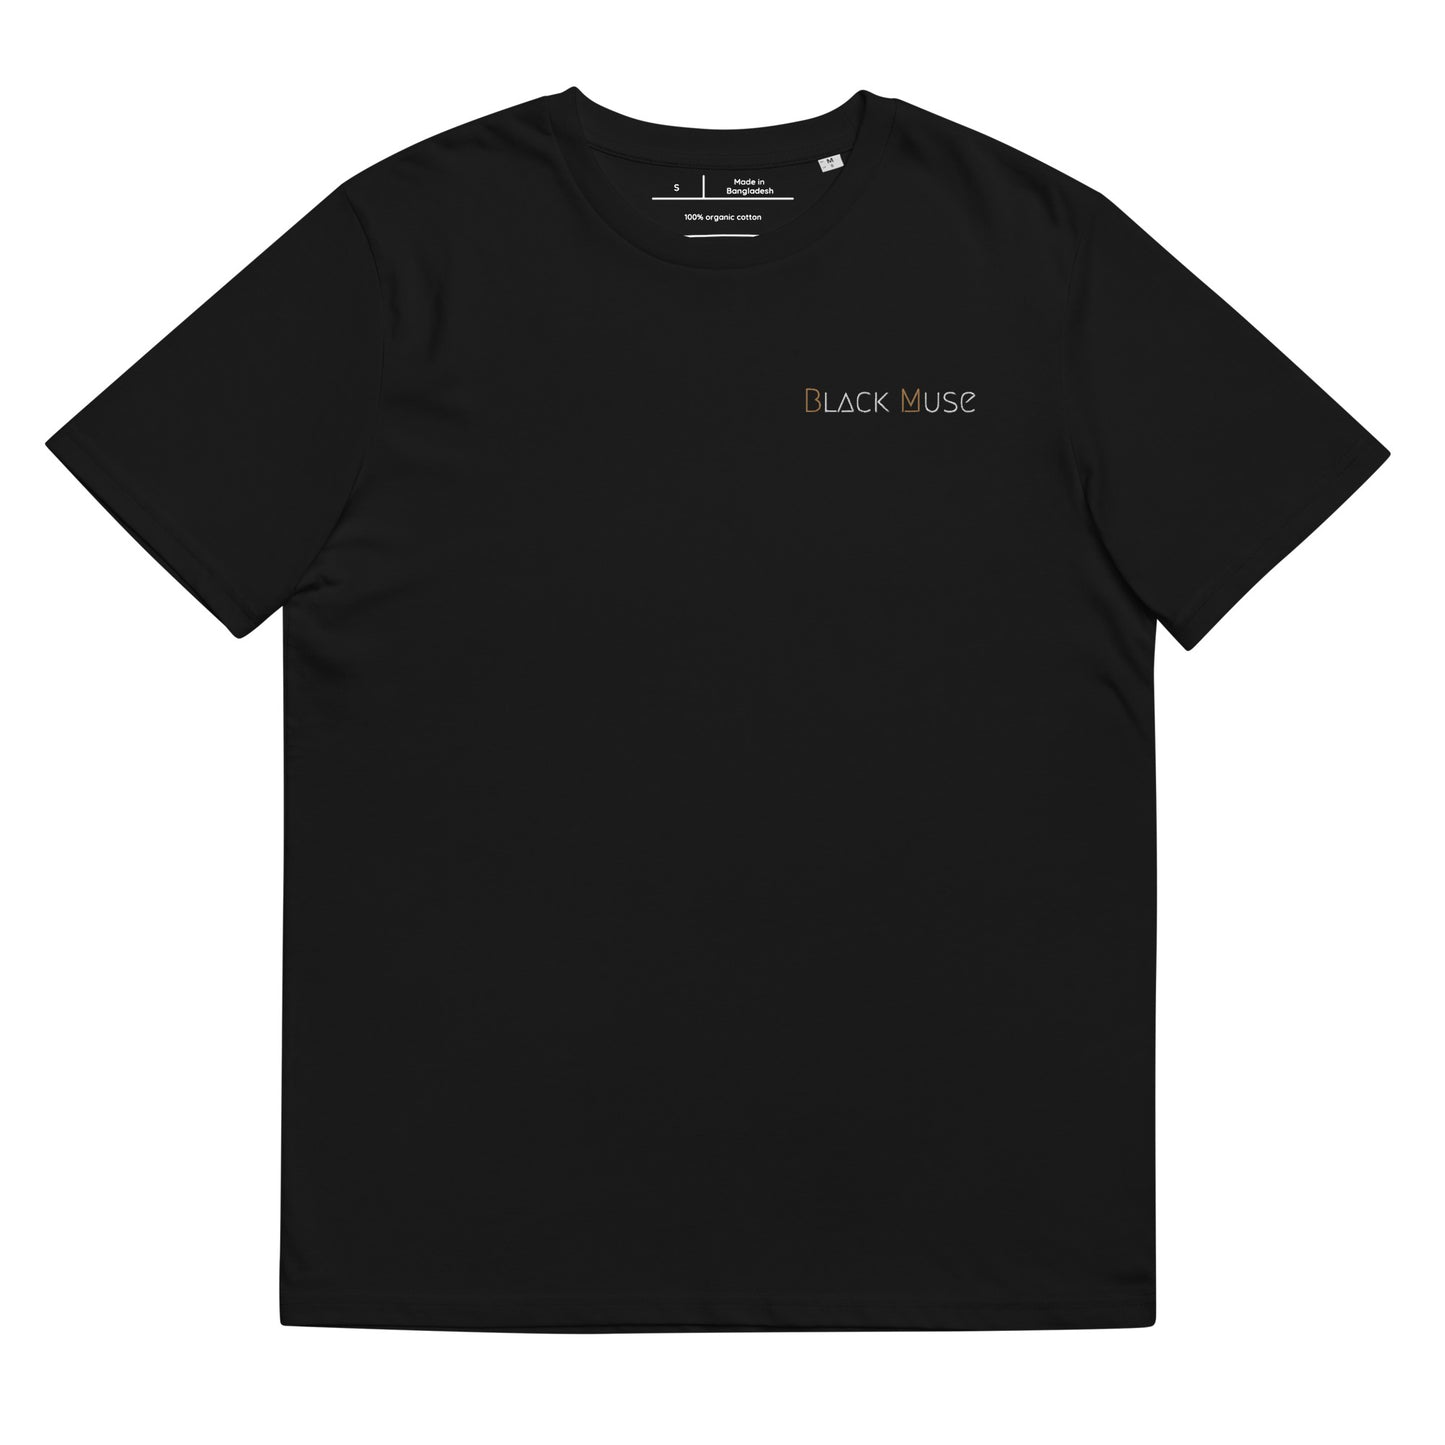 Black Muse - T-shirt